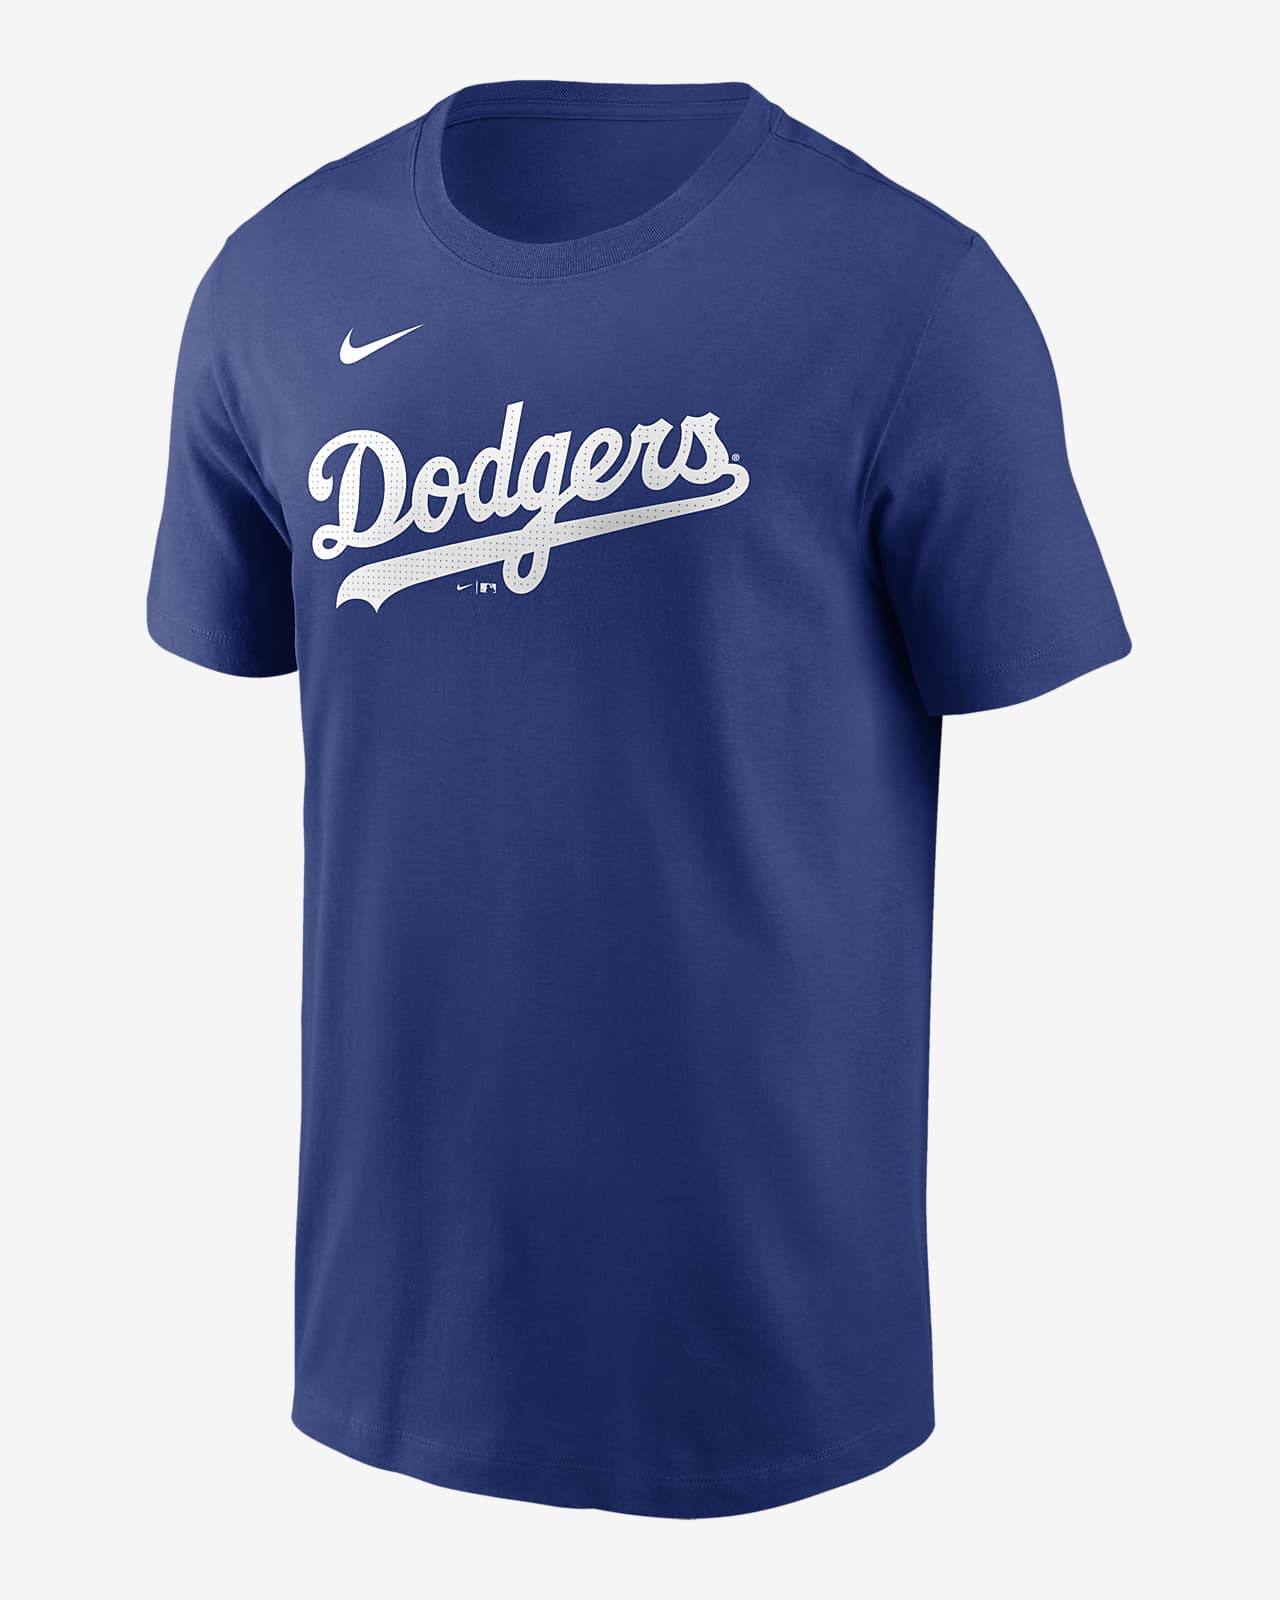 Clayton Kershaw Los Angeles Dodgers Fuse Men's Nike MLB T-Shirt